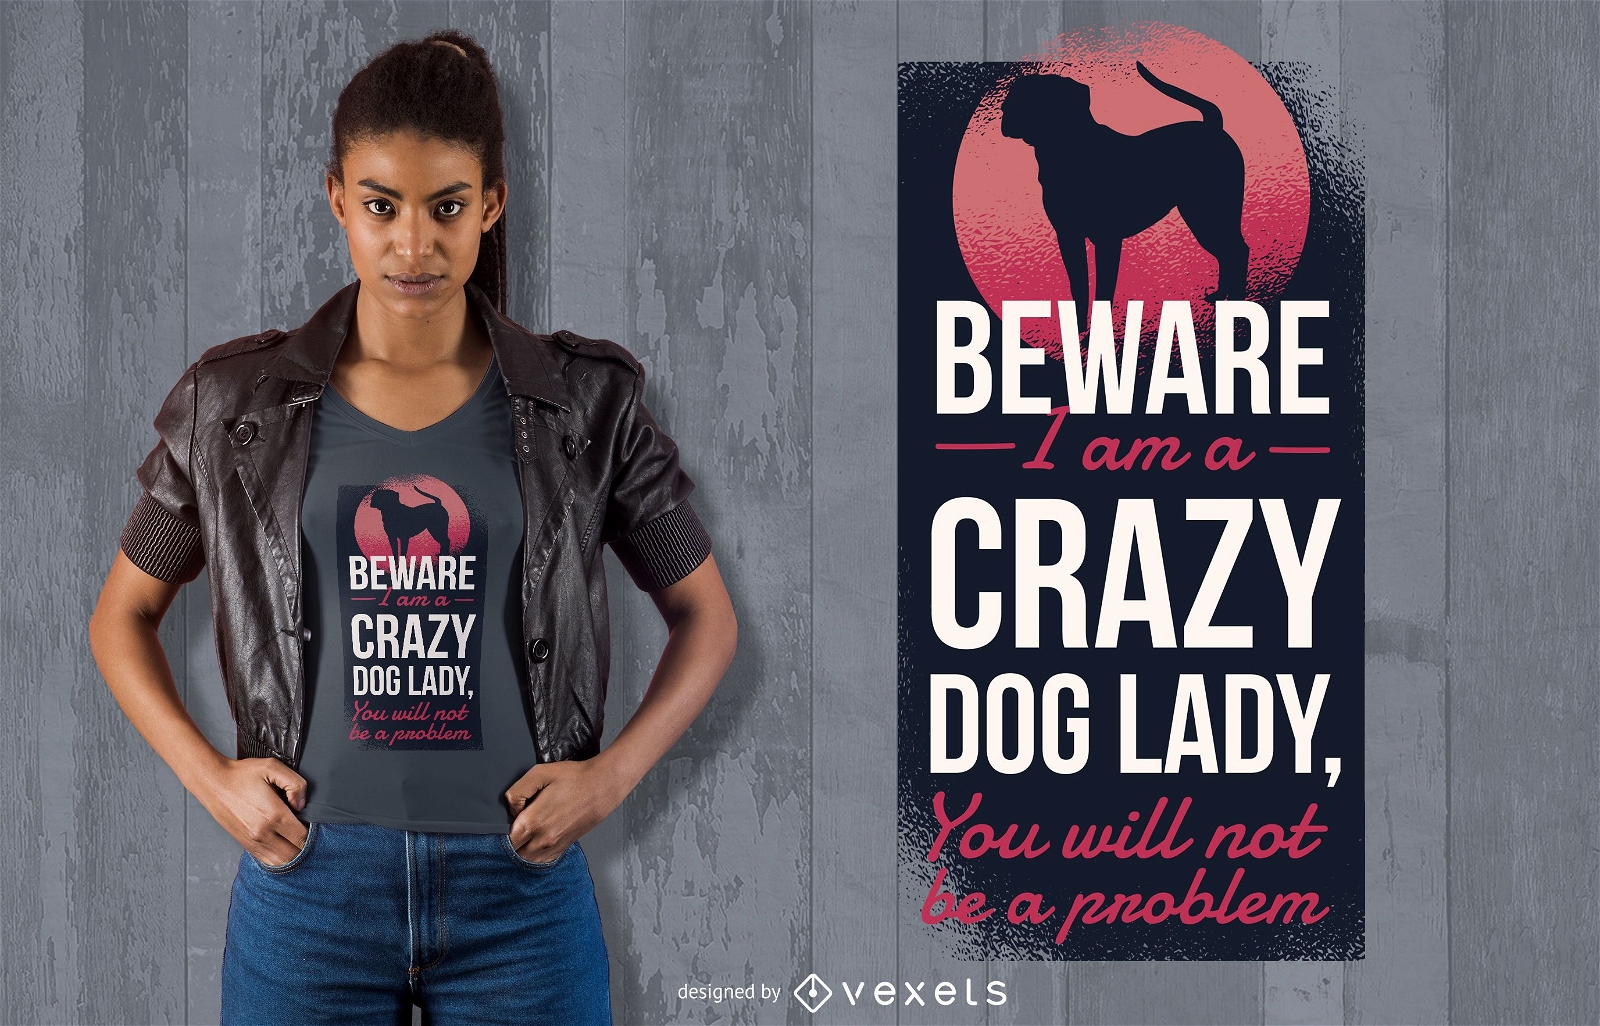 Crazy dog lady t-shirt design